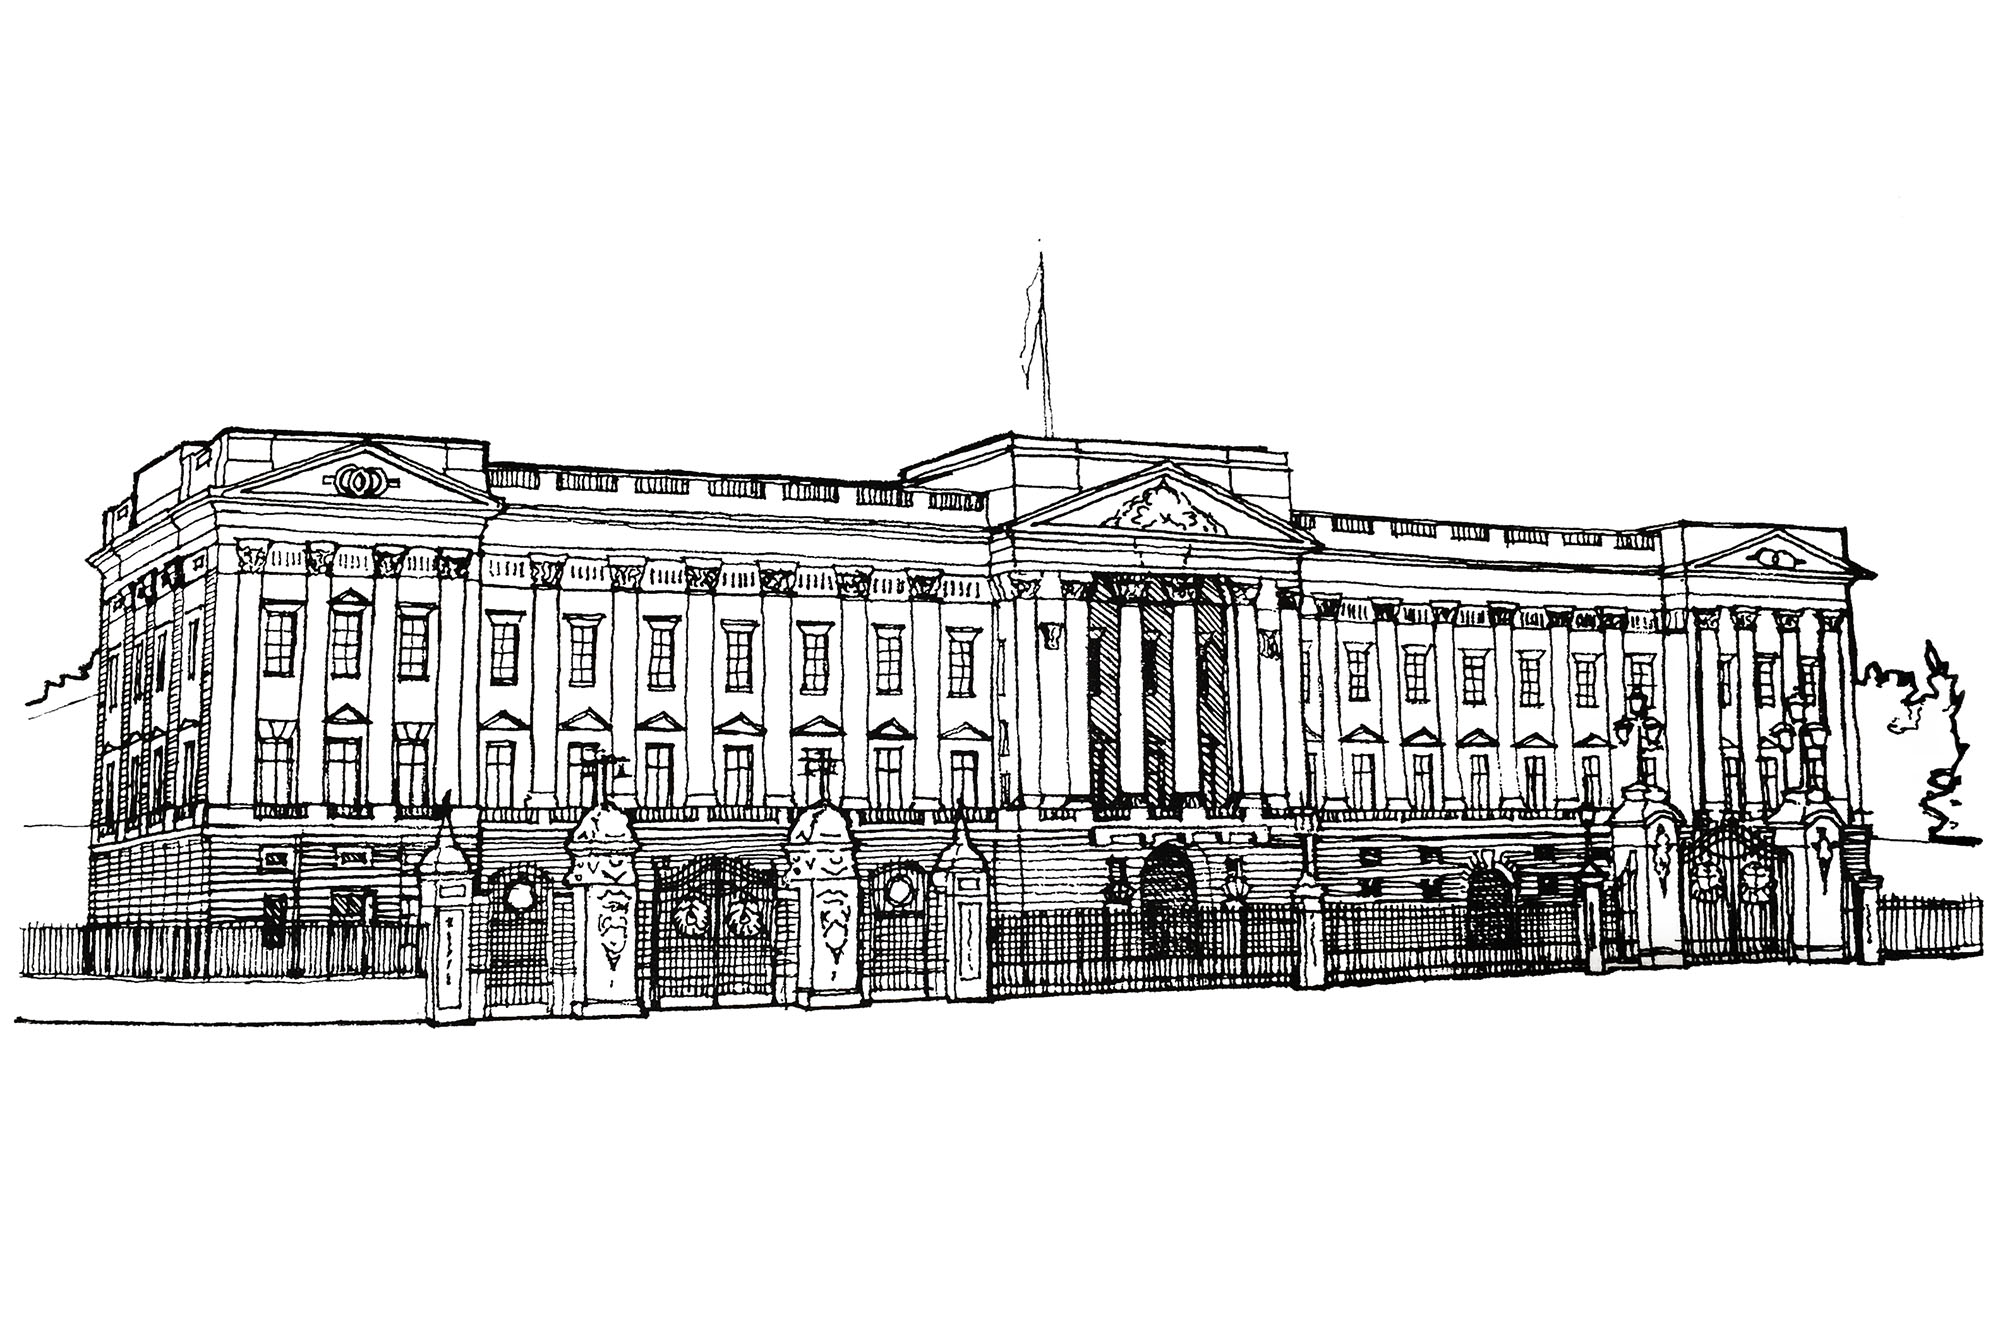 A 1820 illustration of Buckhingham Palace, London